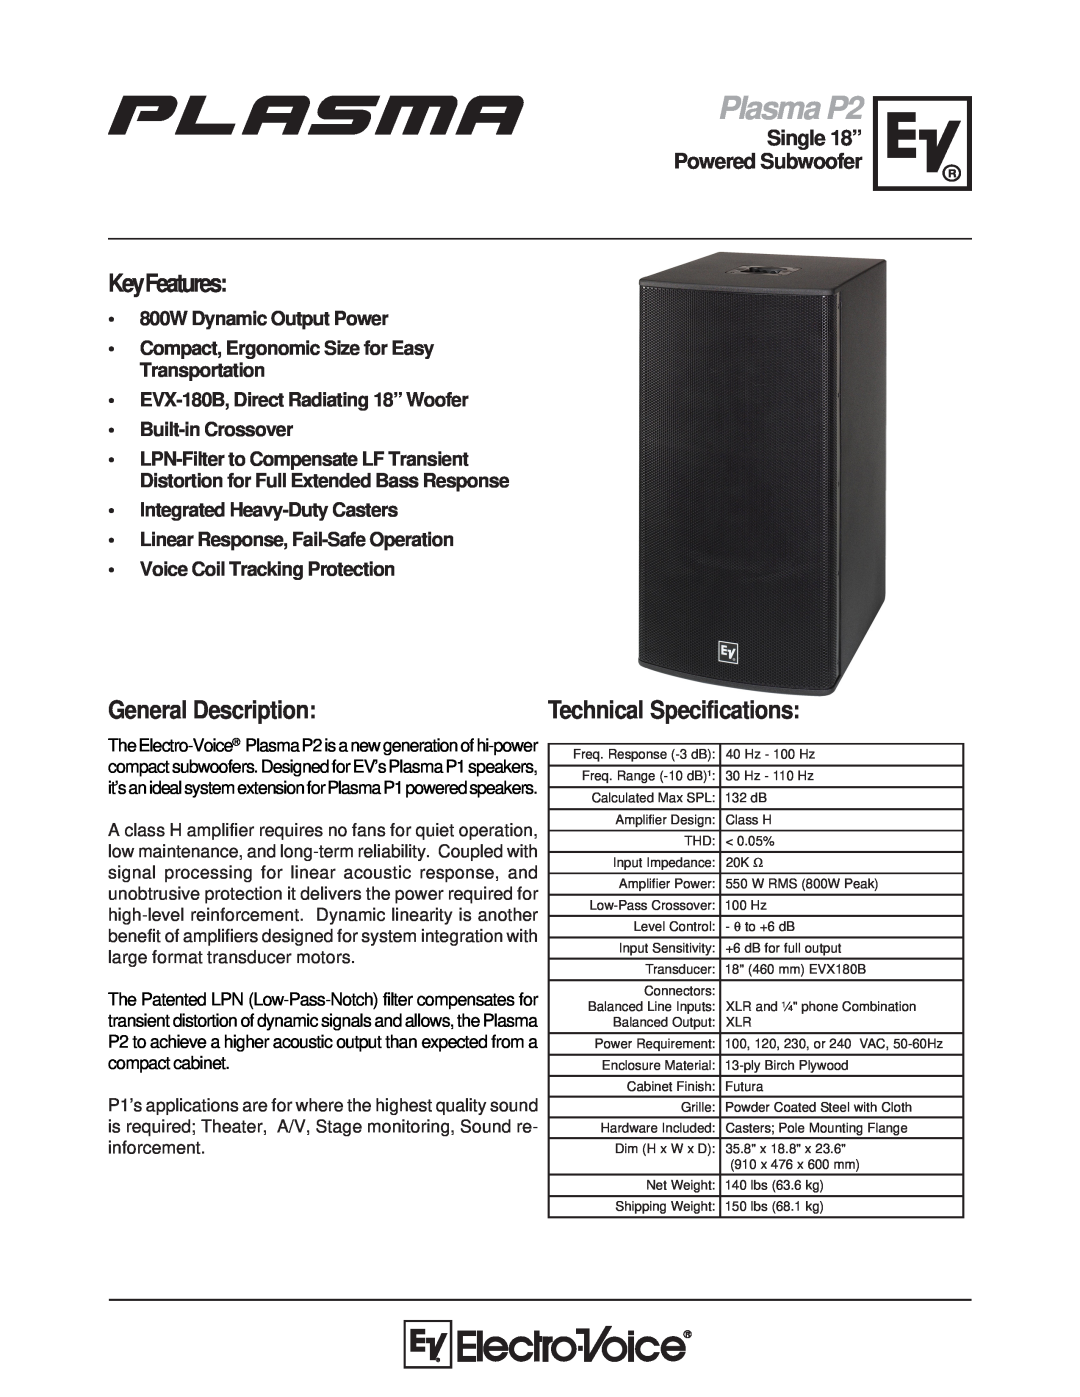 Electro-Voice Plasma P2 technical specifications KeyFeatures, General Description, Single 18” Powered Subwoofer 